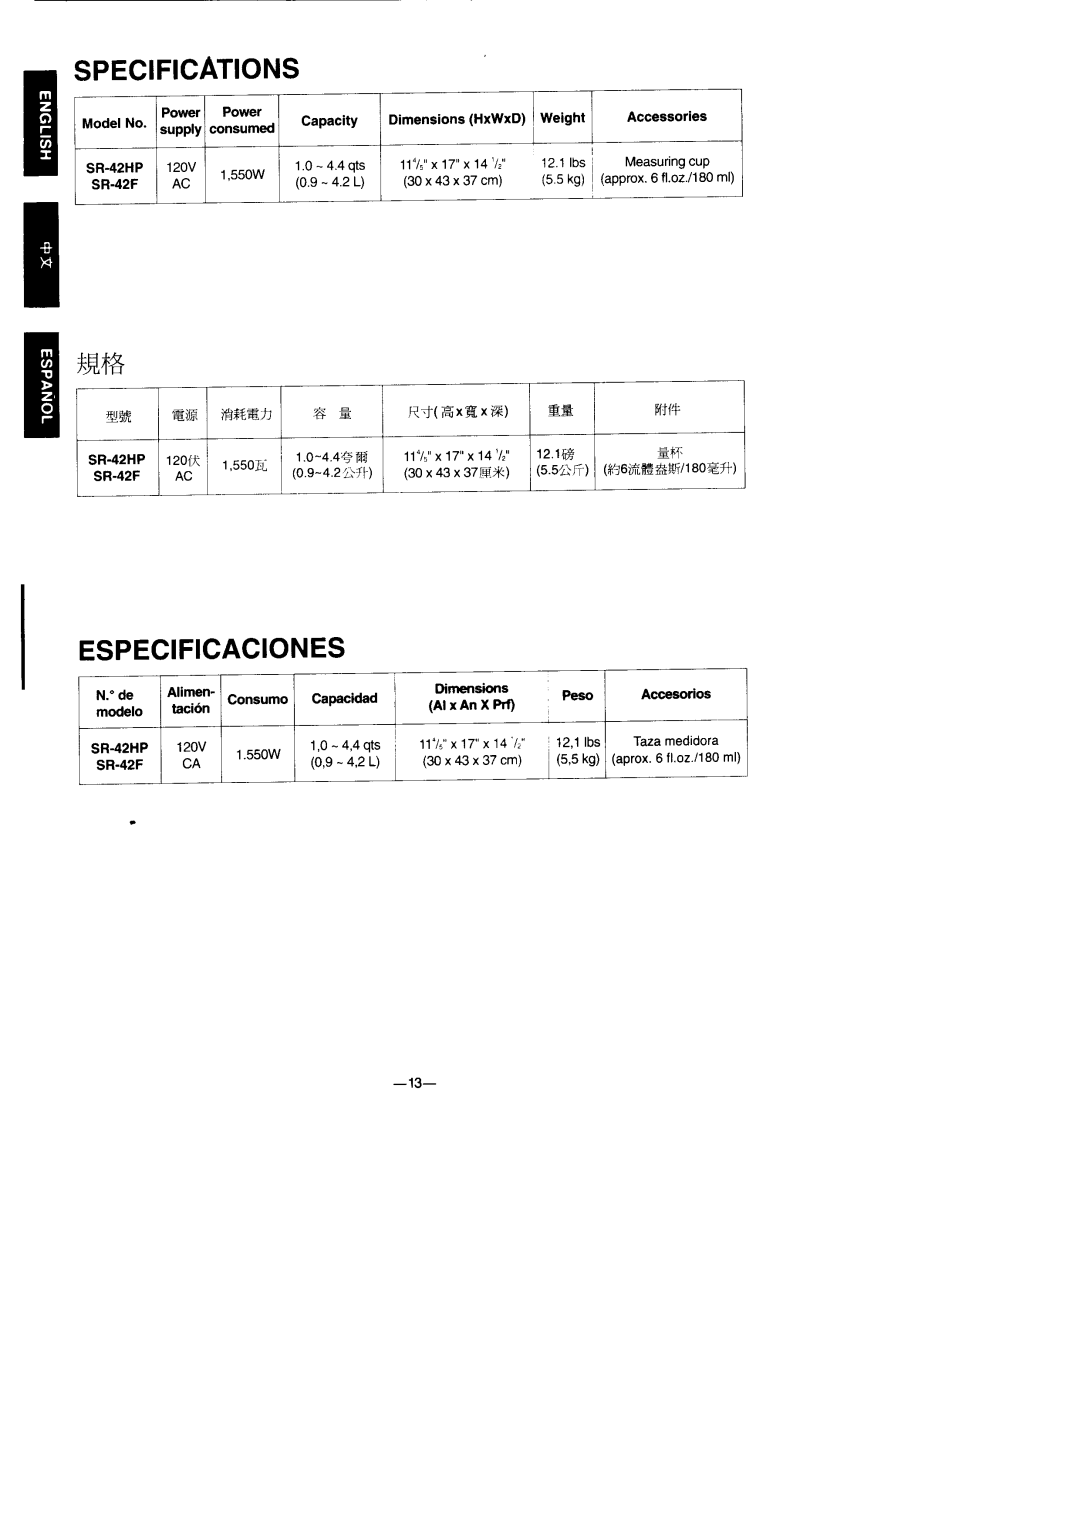 Panasonic SR-42HP/42F manual f.H+, lfffiffi, Specifications, Especificaciones 